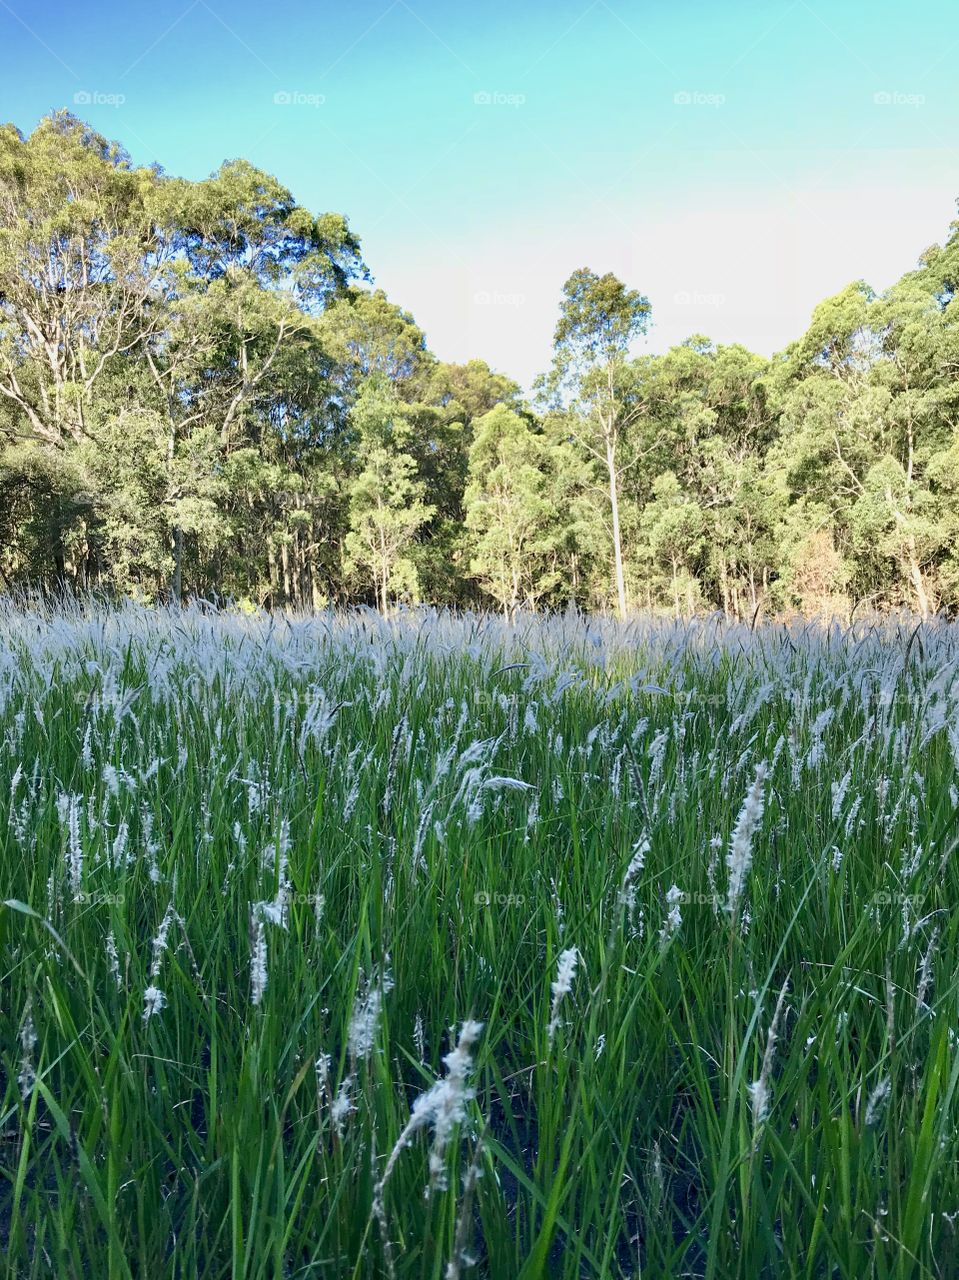 Flowering grass with eucalyptus trees in the background, Jesmond, Newcastle NSW, Australia 